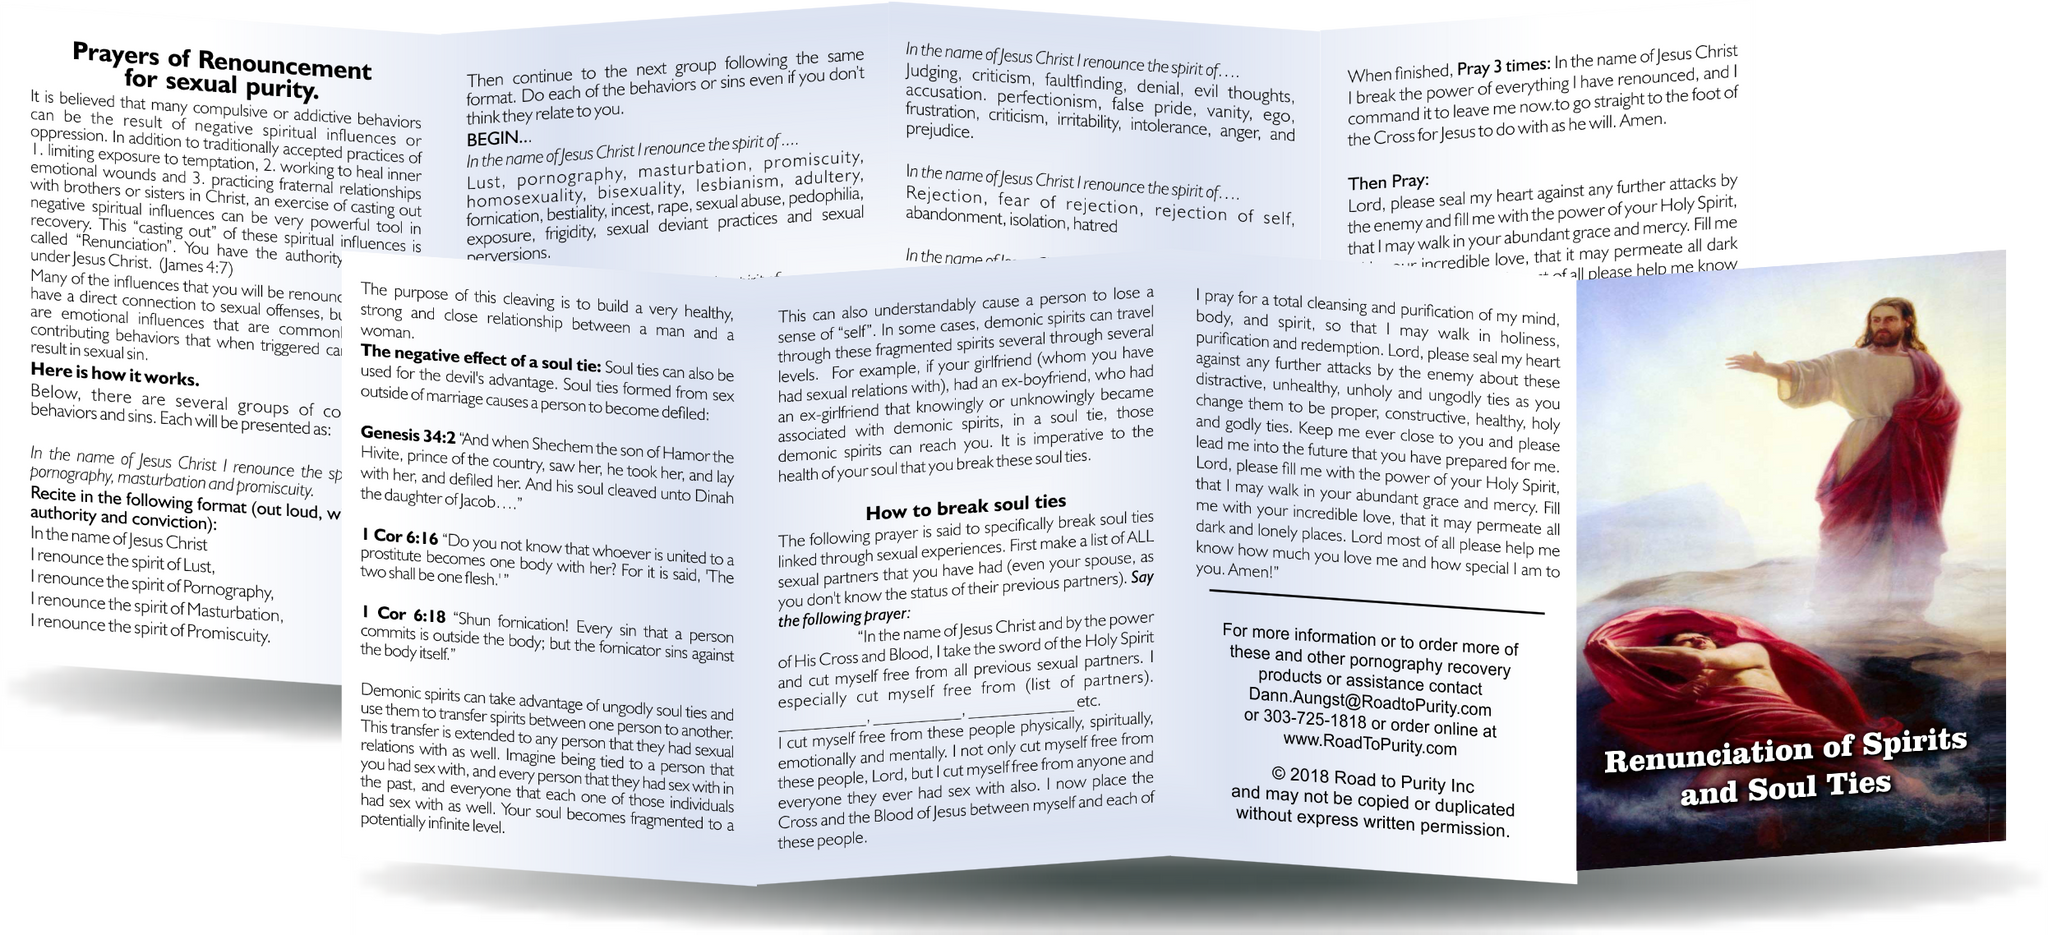 Renunciation Prayers and Breaking Soul Ties (b) - 8pg mini pamphlet - from $1